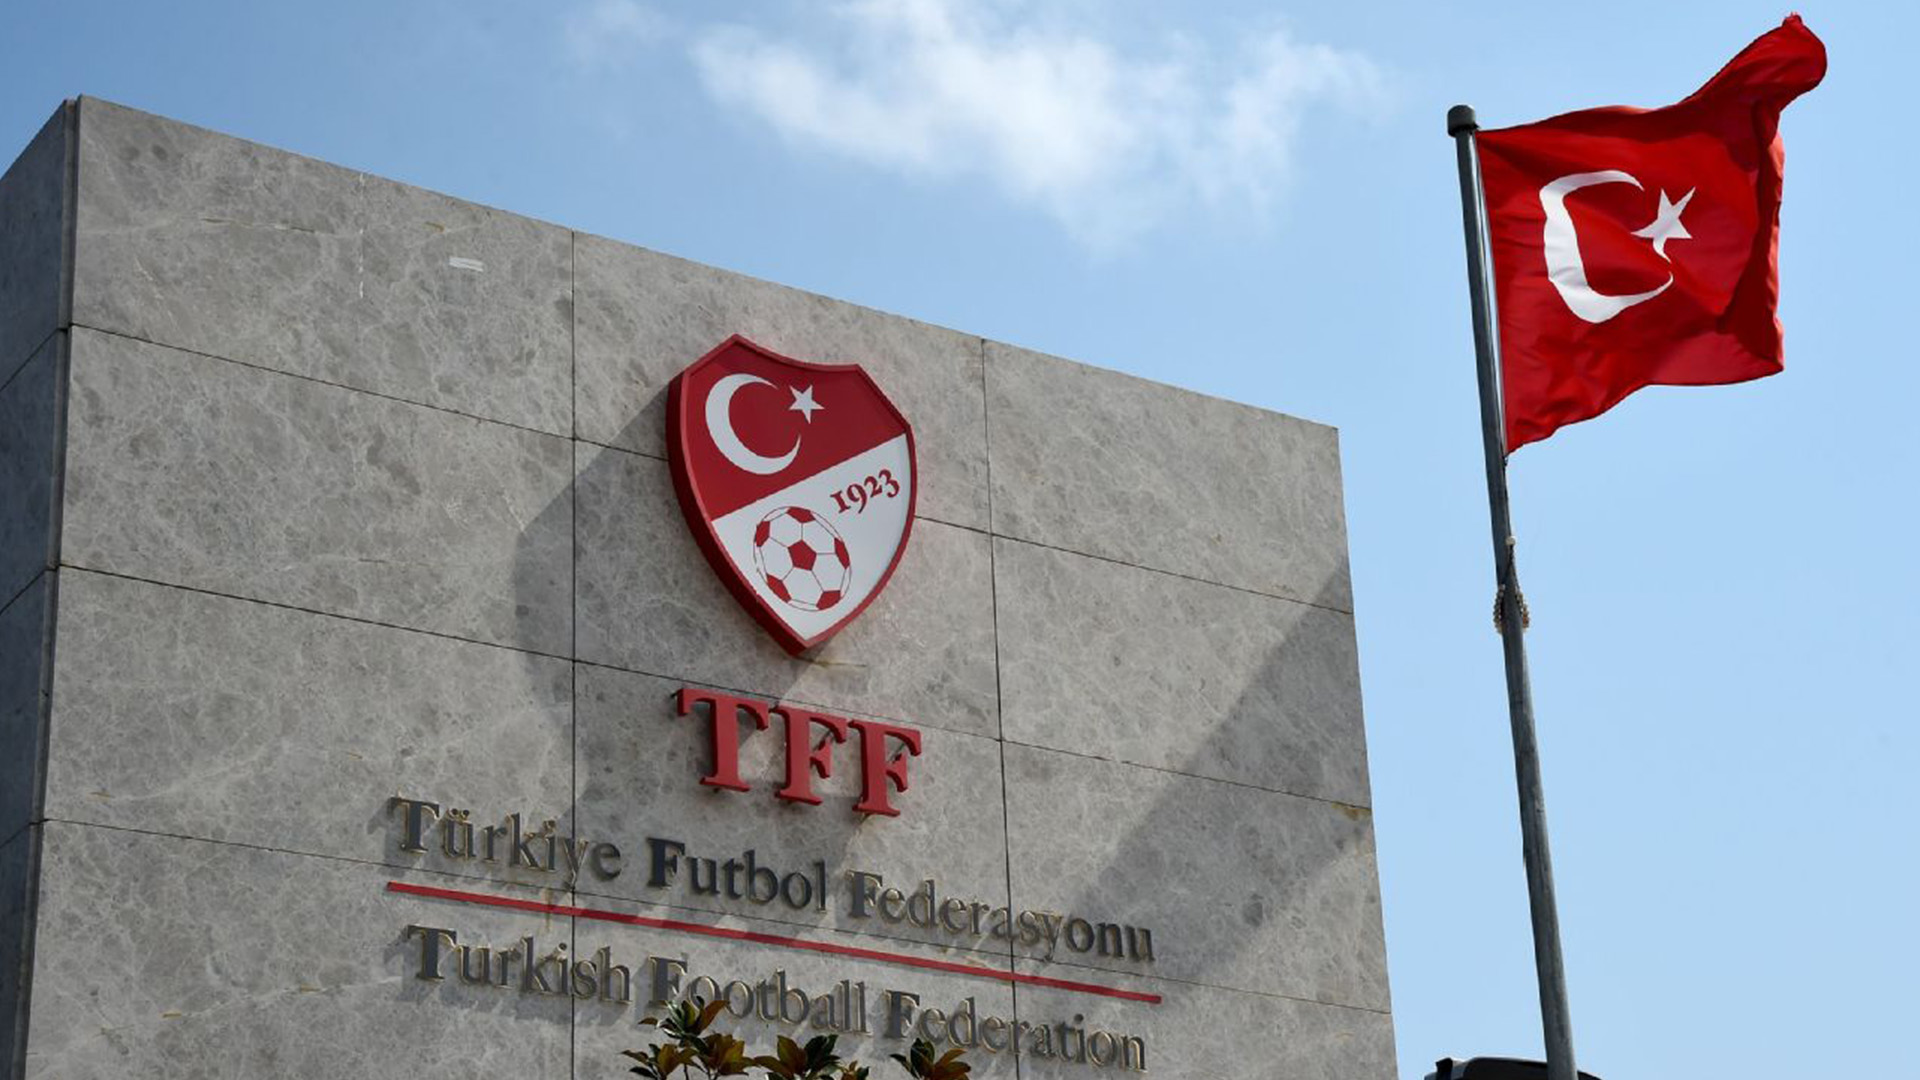 Ankara Barosu'ndan TFF hakkında suç duyurusu